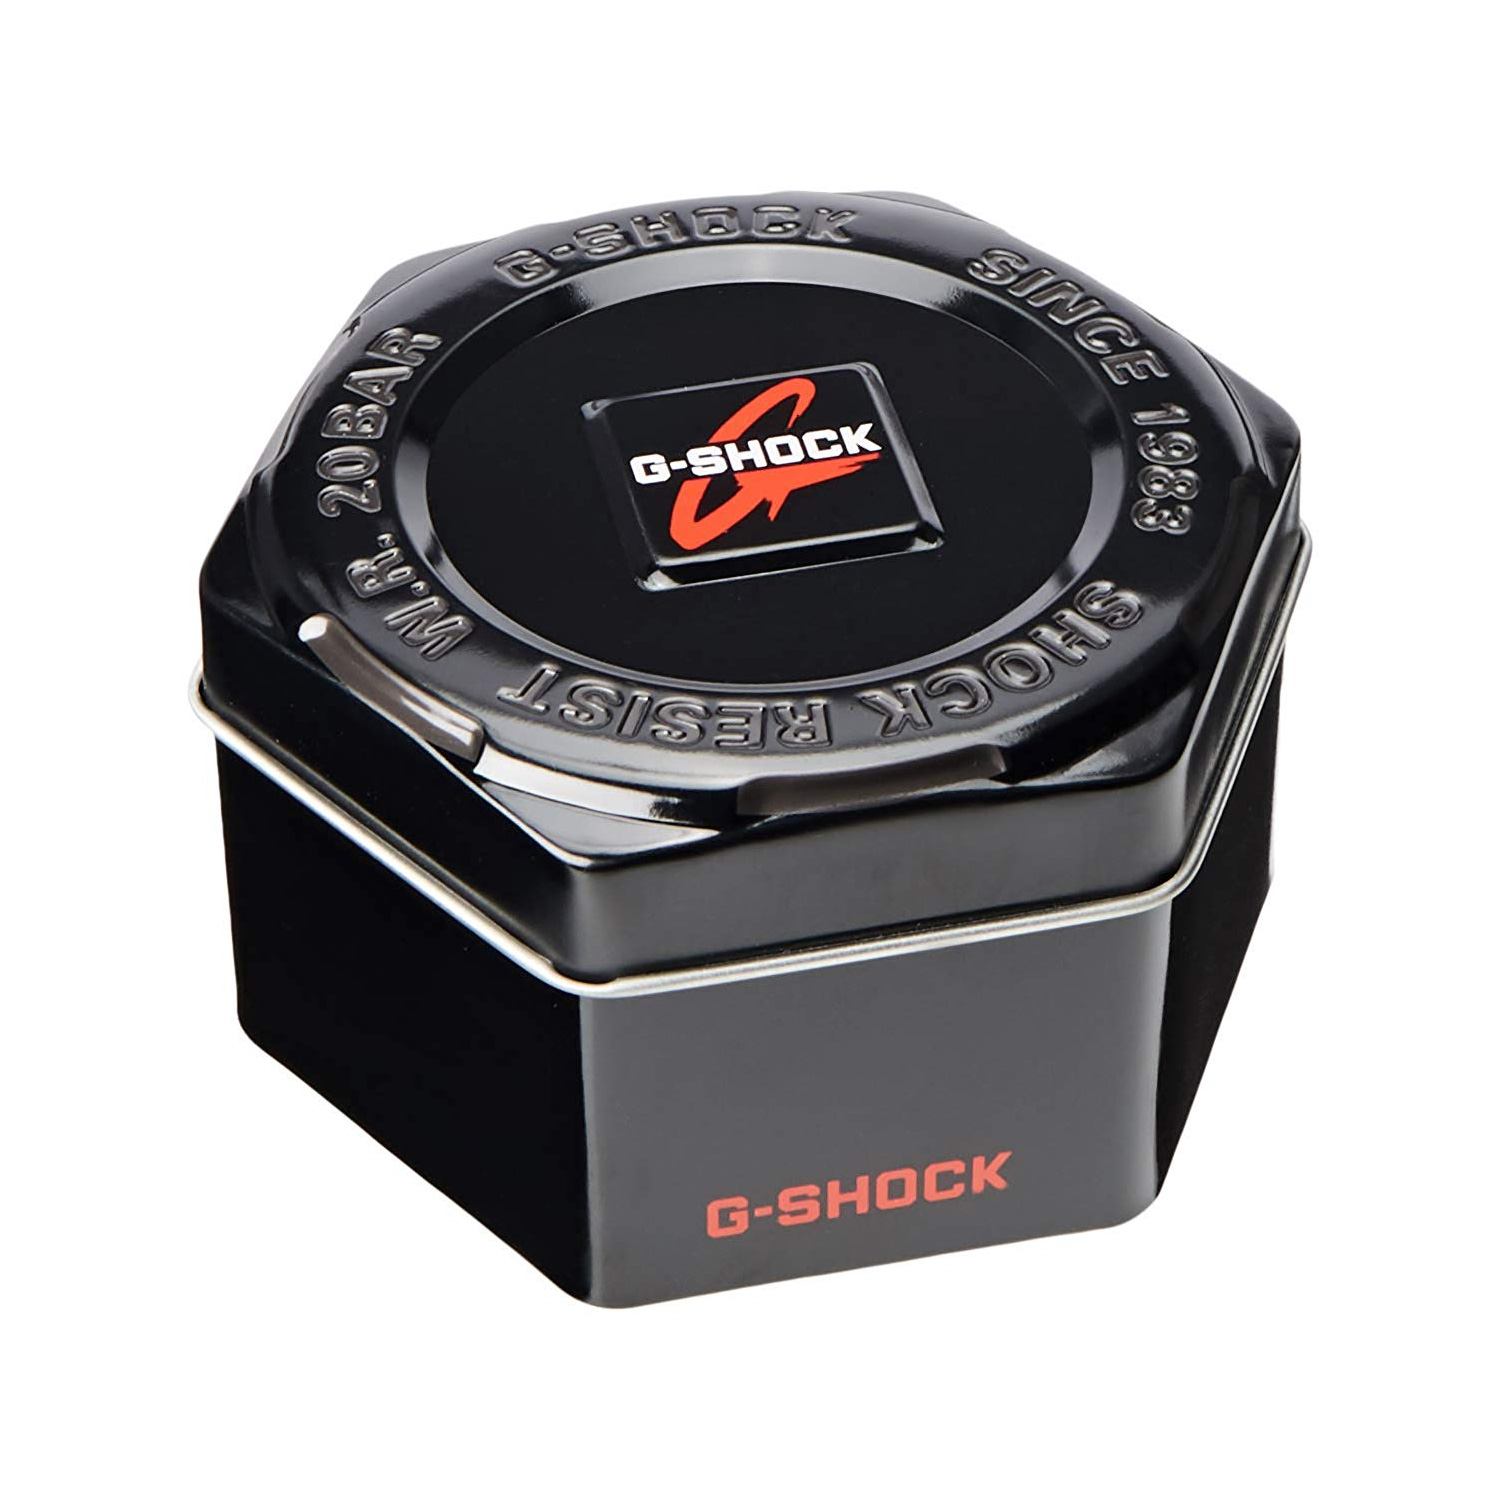 Casio Men's G-Shock DW6900LU-8 Watch